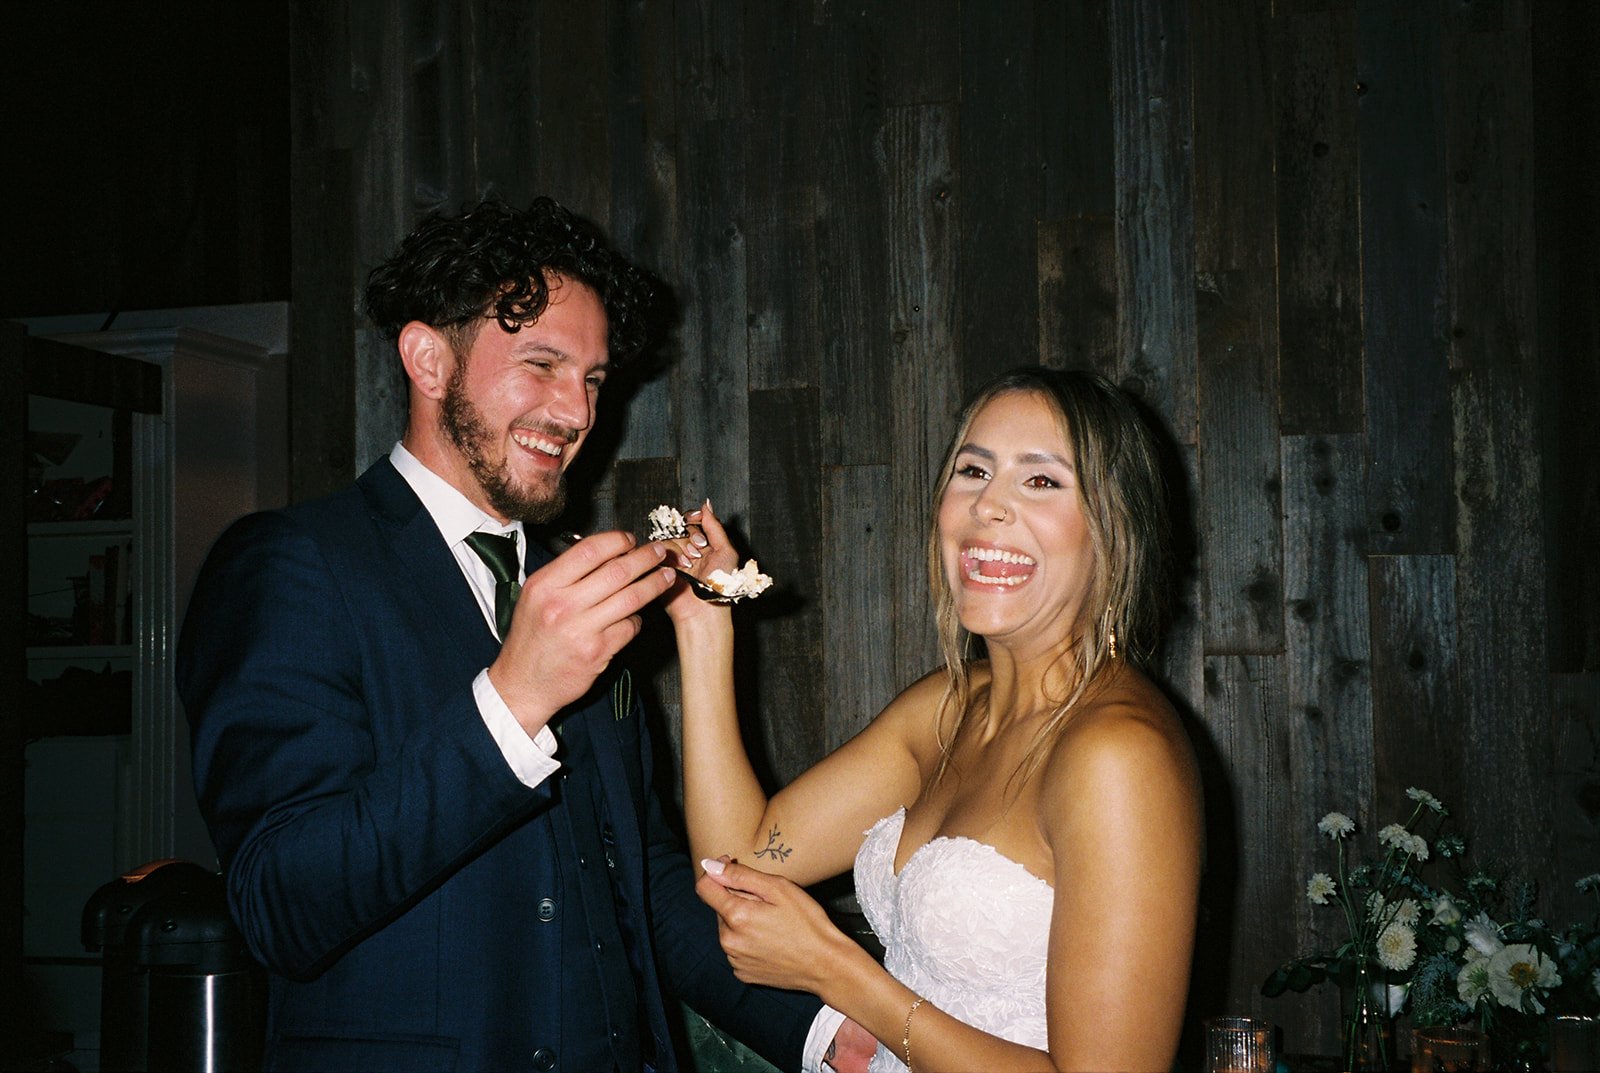 Film photos of bride and groom eating wedding cake